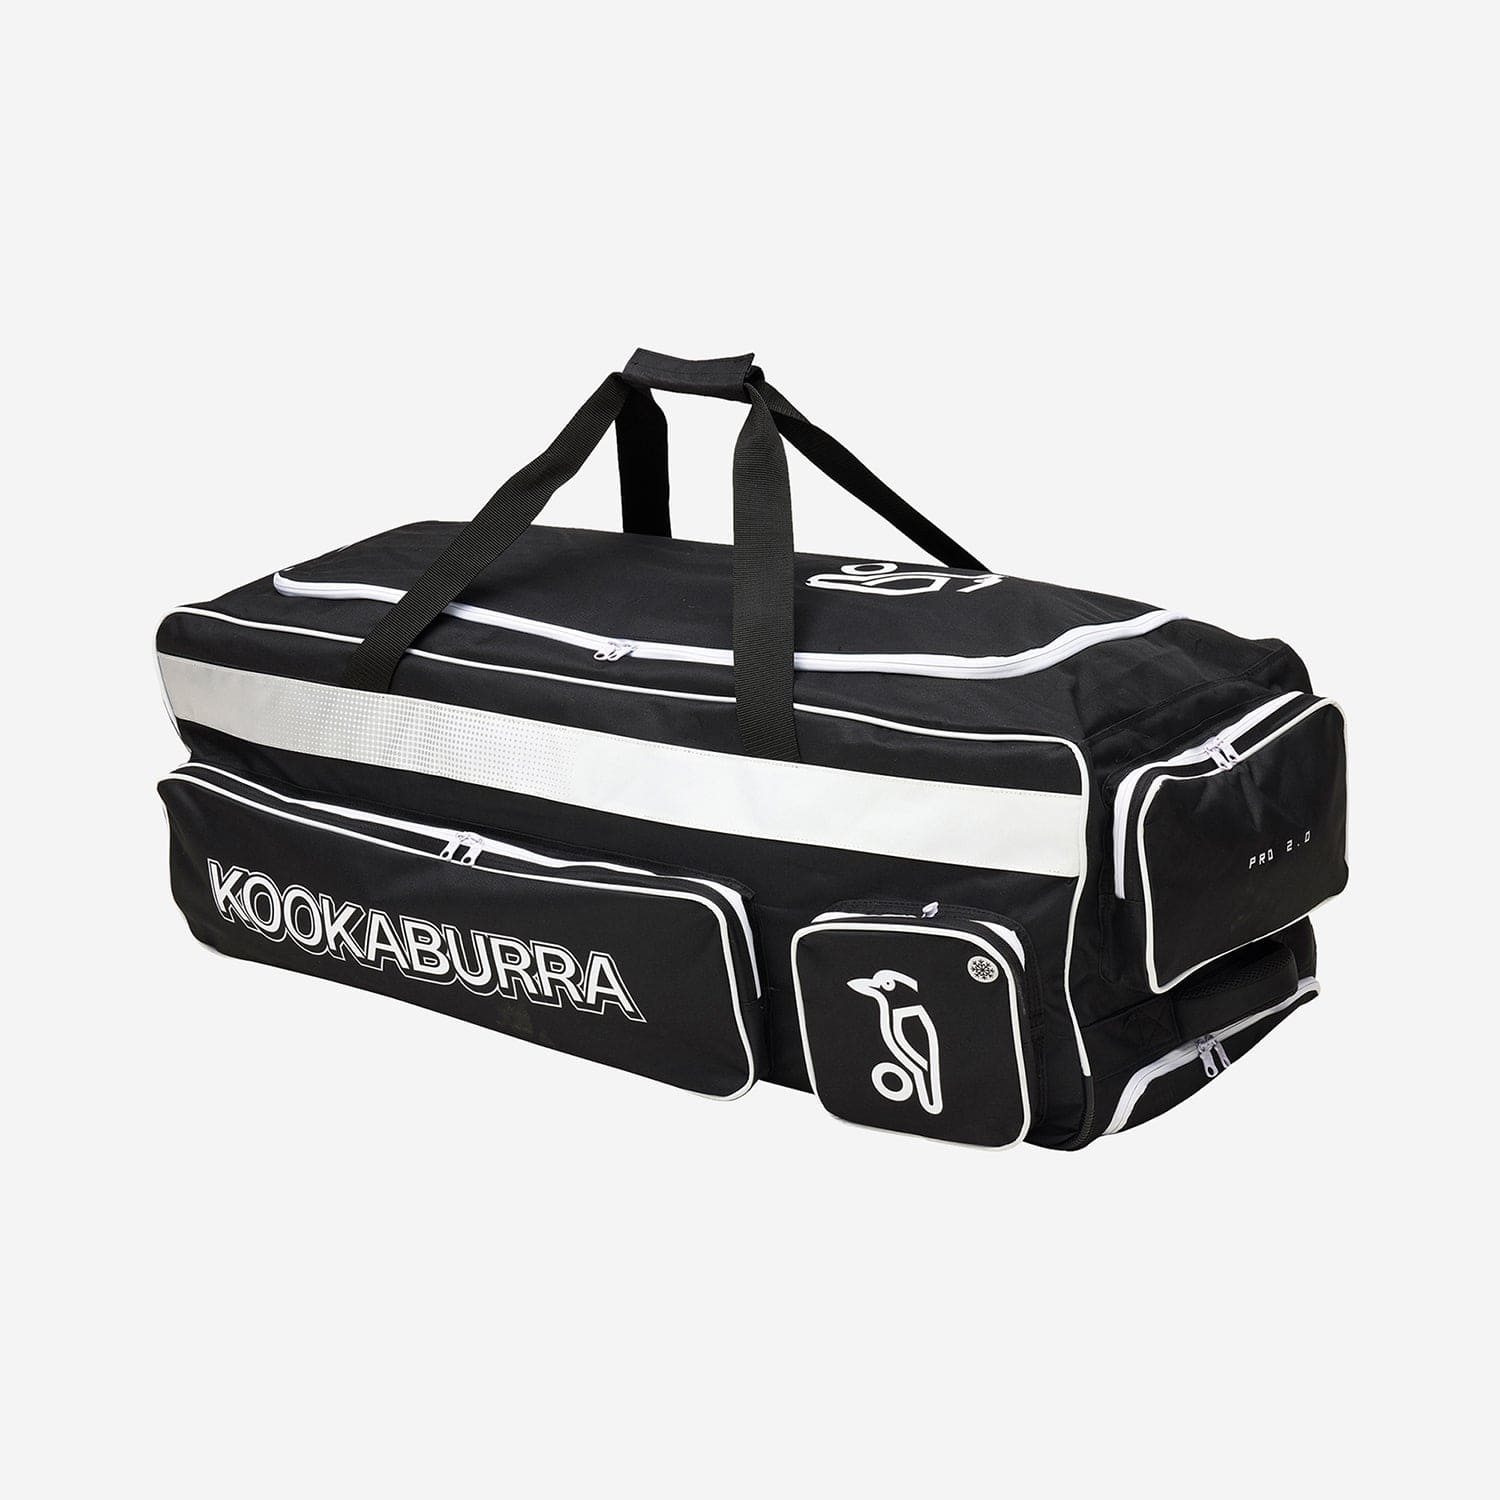 Kookaburra Cricket Bags White Kookaburra Pro 2.0 Wheelie Cricket Bag